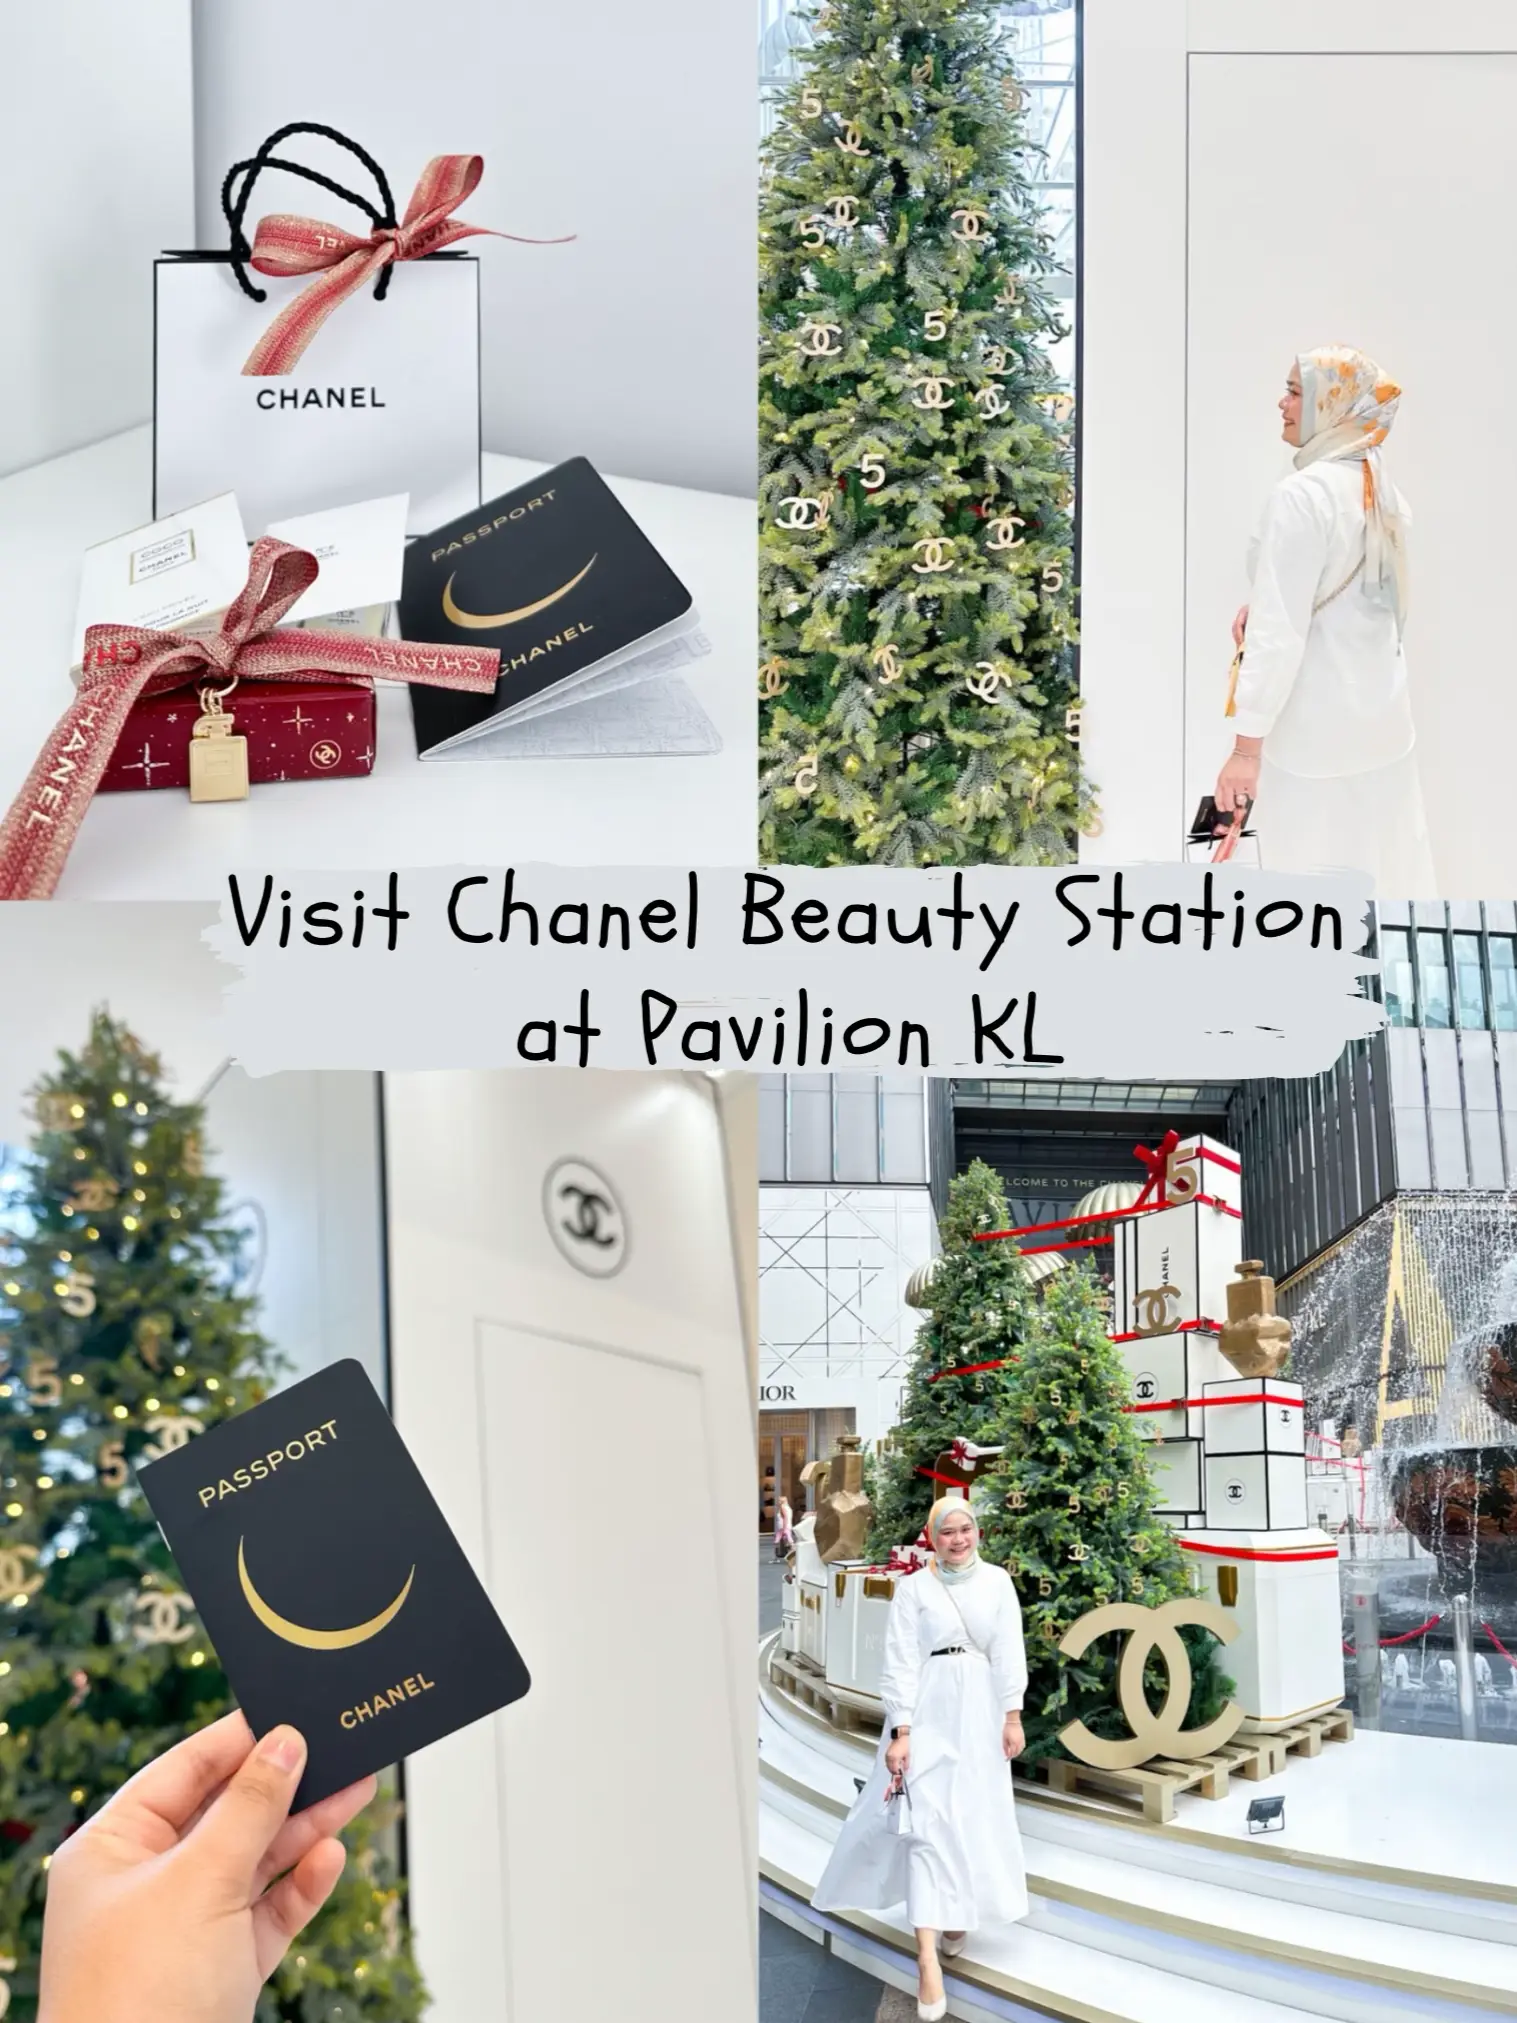 ✨Come Visit Chanel Beauty Station at Pavilion KL✨